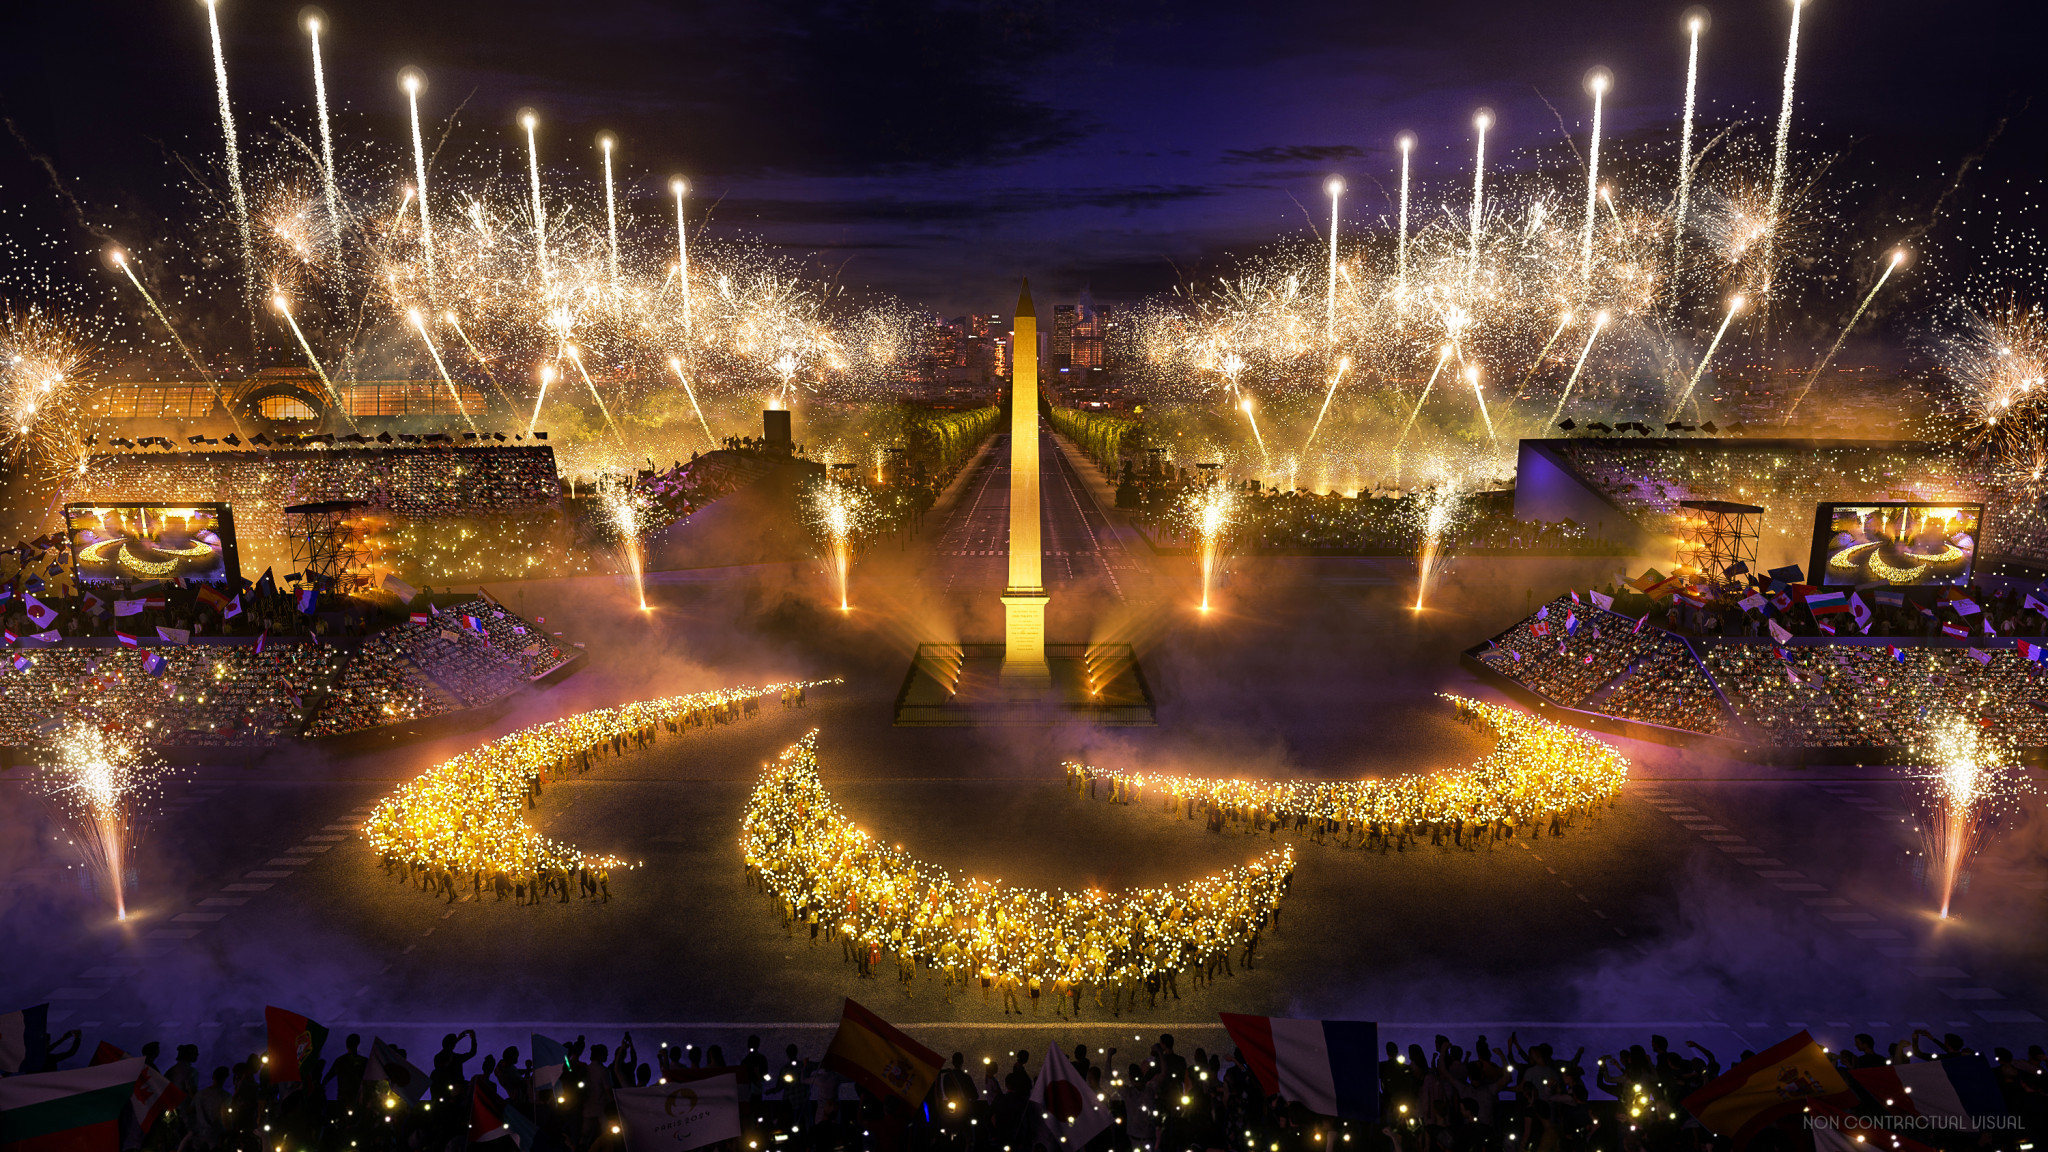 Paris 2024 have promised a spectacular Paralympic Games Opening Ceremony in the Place de la Concorde ©Paris 2024